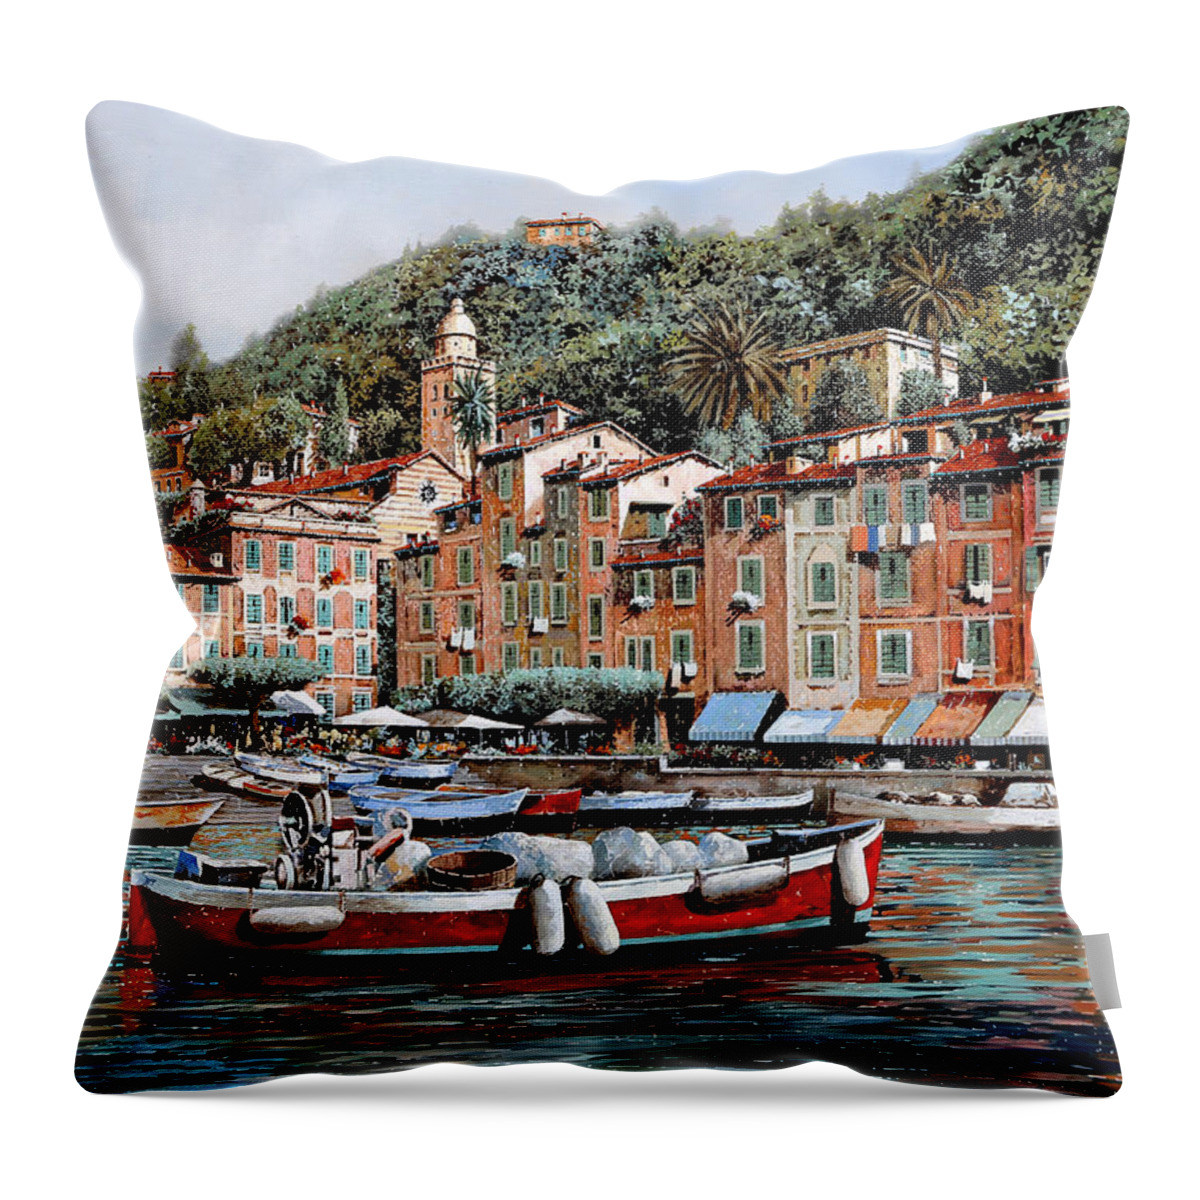 Portofino Throw Pillow featuring the painting Una Lunga Barca Rossa by Guido Borelli